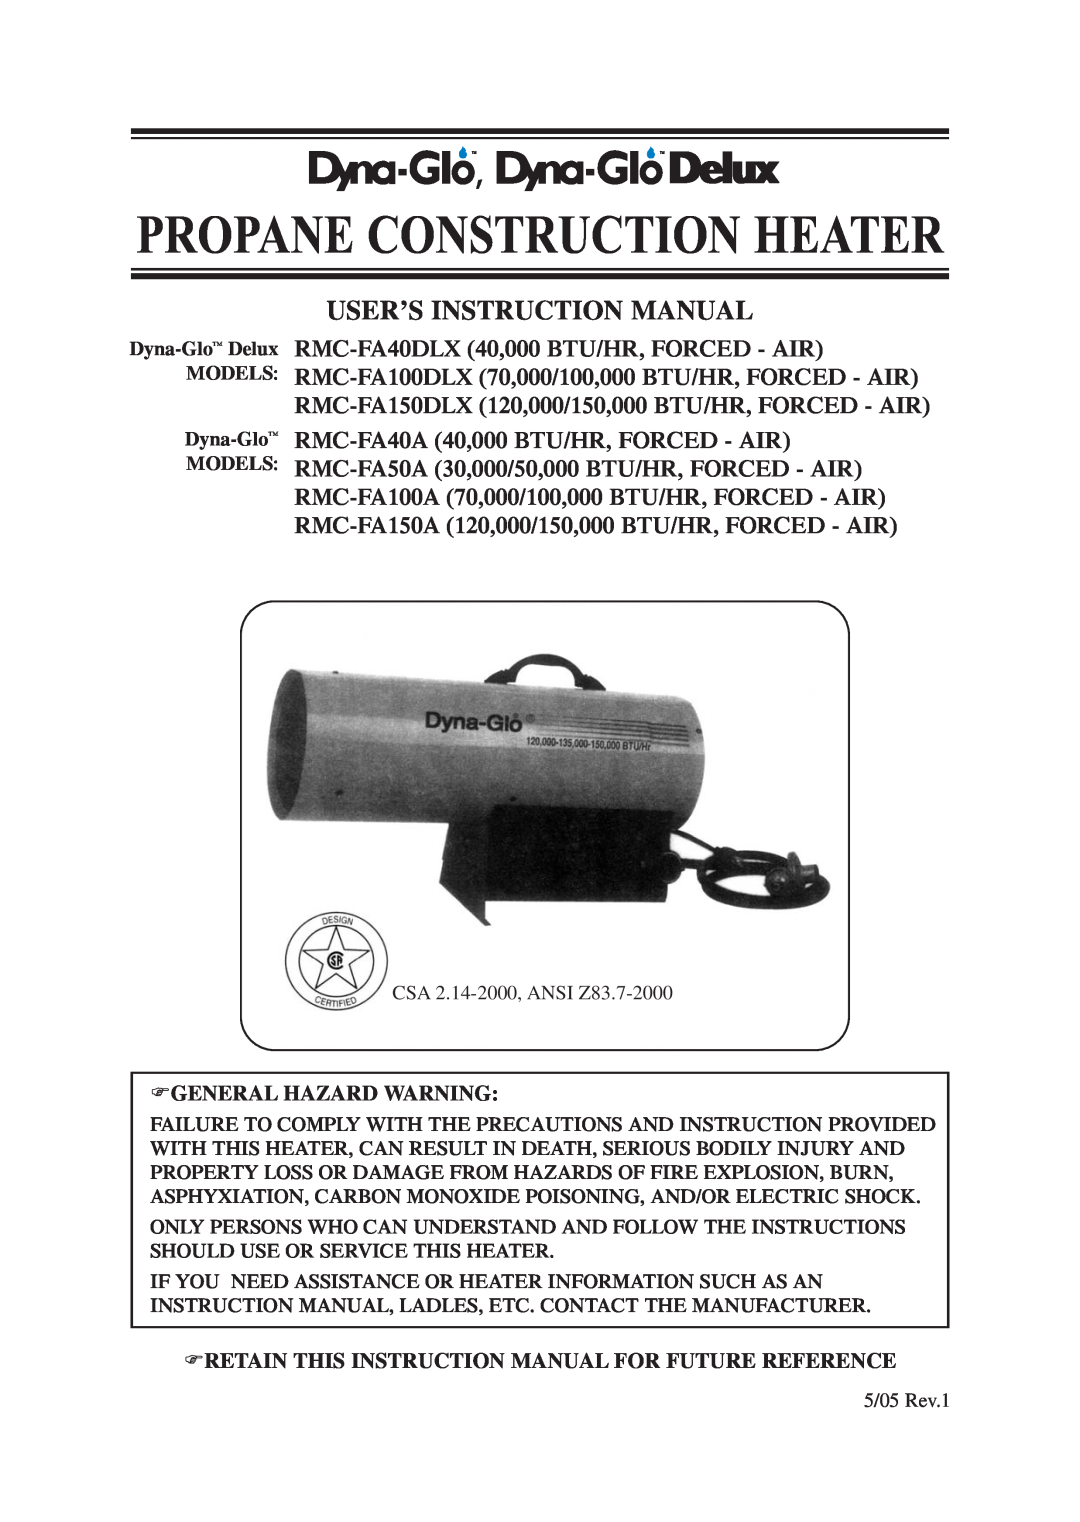 Vermont Casting ANSI Z83.7-2000, CSA 2.14-2000 instruction manual Propane Construction Heater 